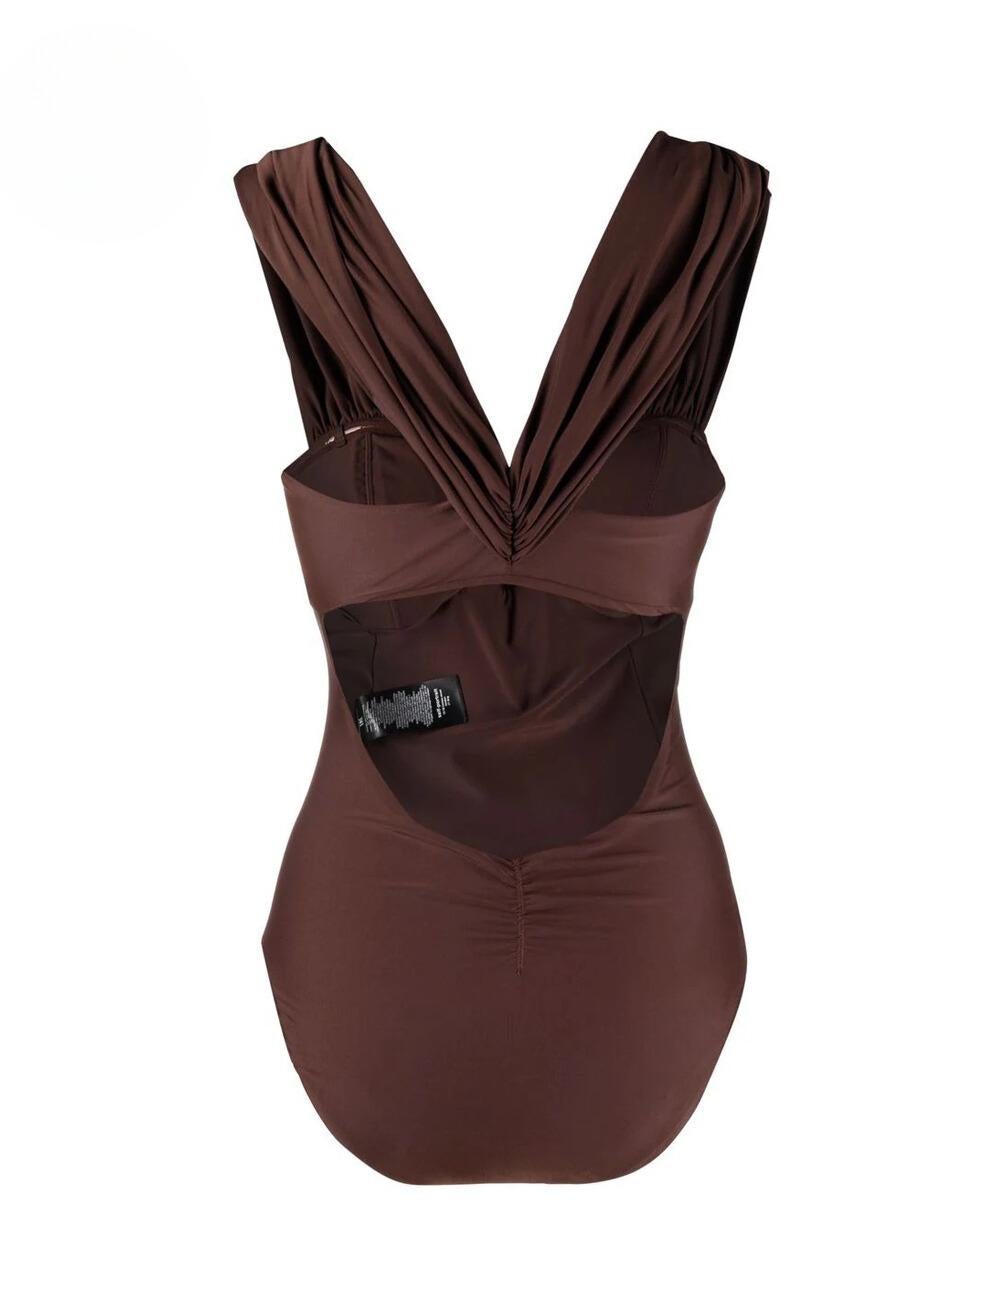 Self-Portrait Brown Cut-out Draped Swimsuit mit drapiertem Ausschnitt, V-Ausschnitt und Slip-on-Stil. 

MATERIAL: Polyester 
Größe: UK 8 / US 4 
Zustand insgesamt: Neu